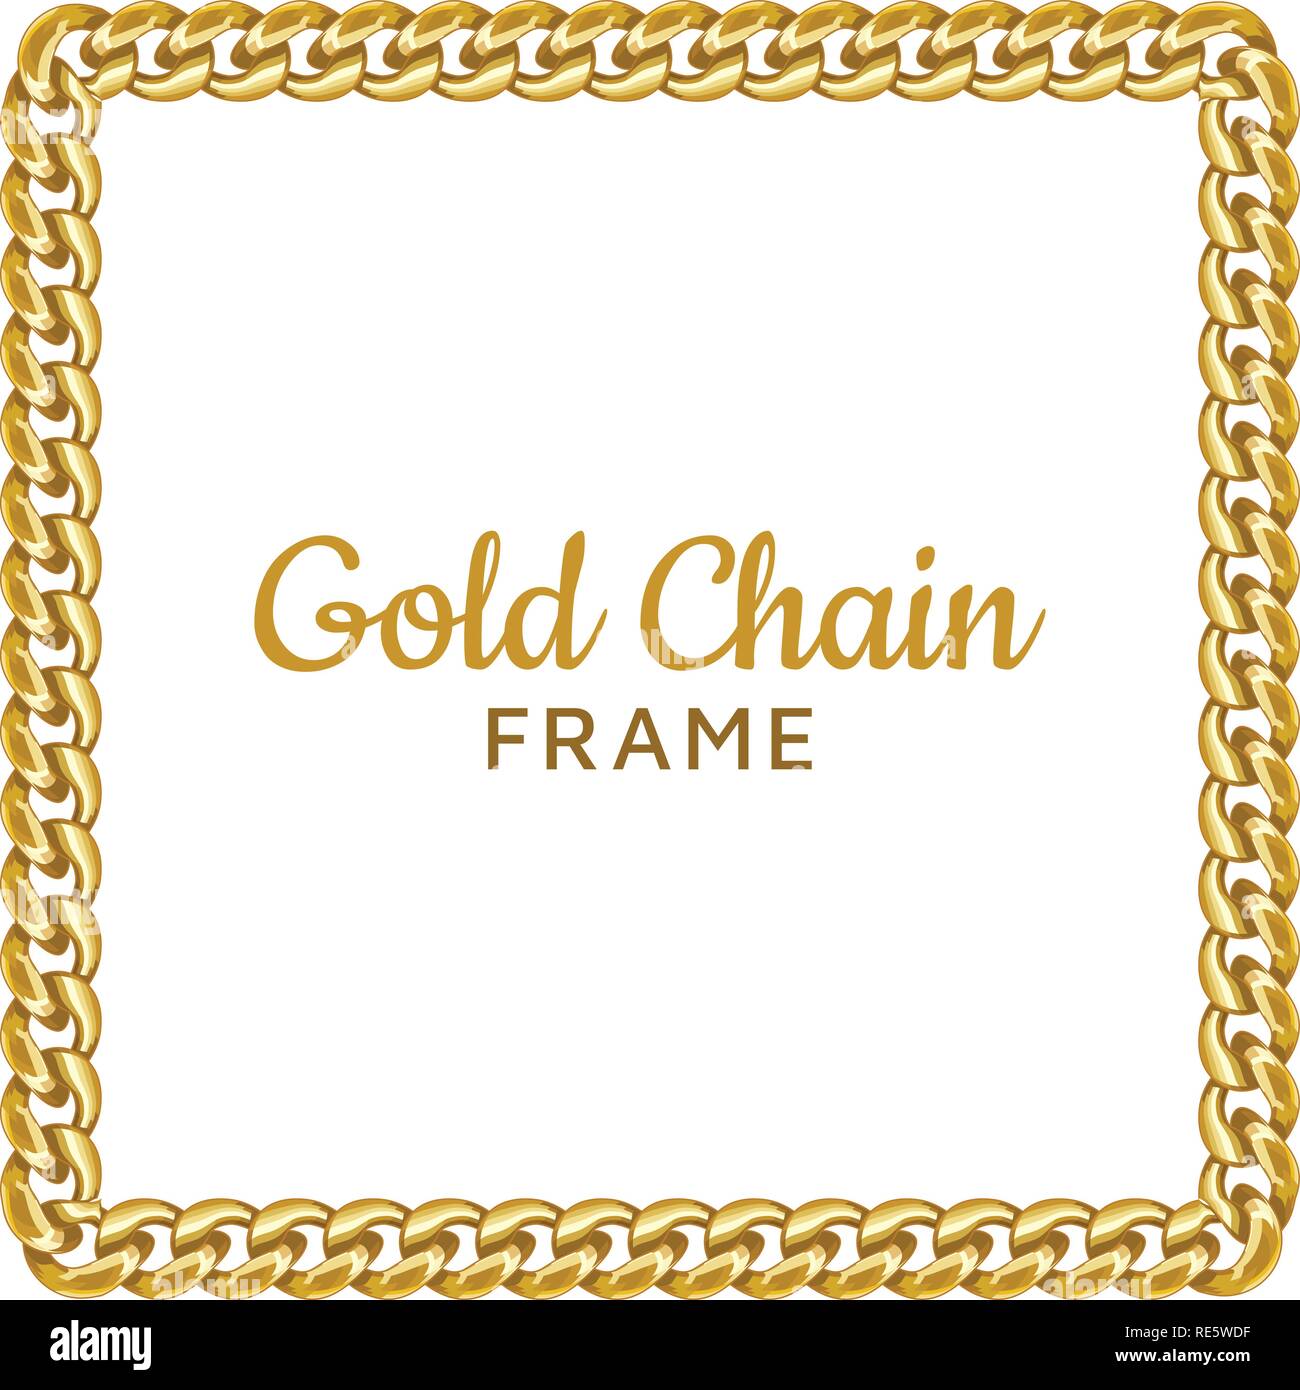 Golden chain square border frame. Rectangle wreath shape. Gold jewelry design. Stock Vector